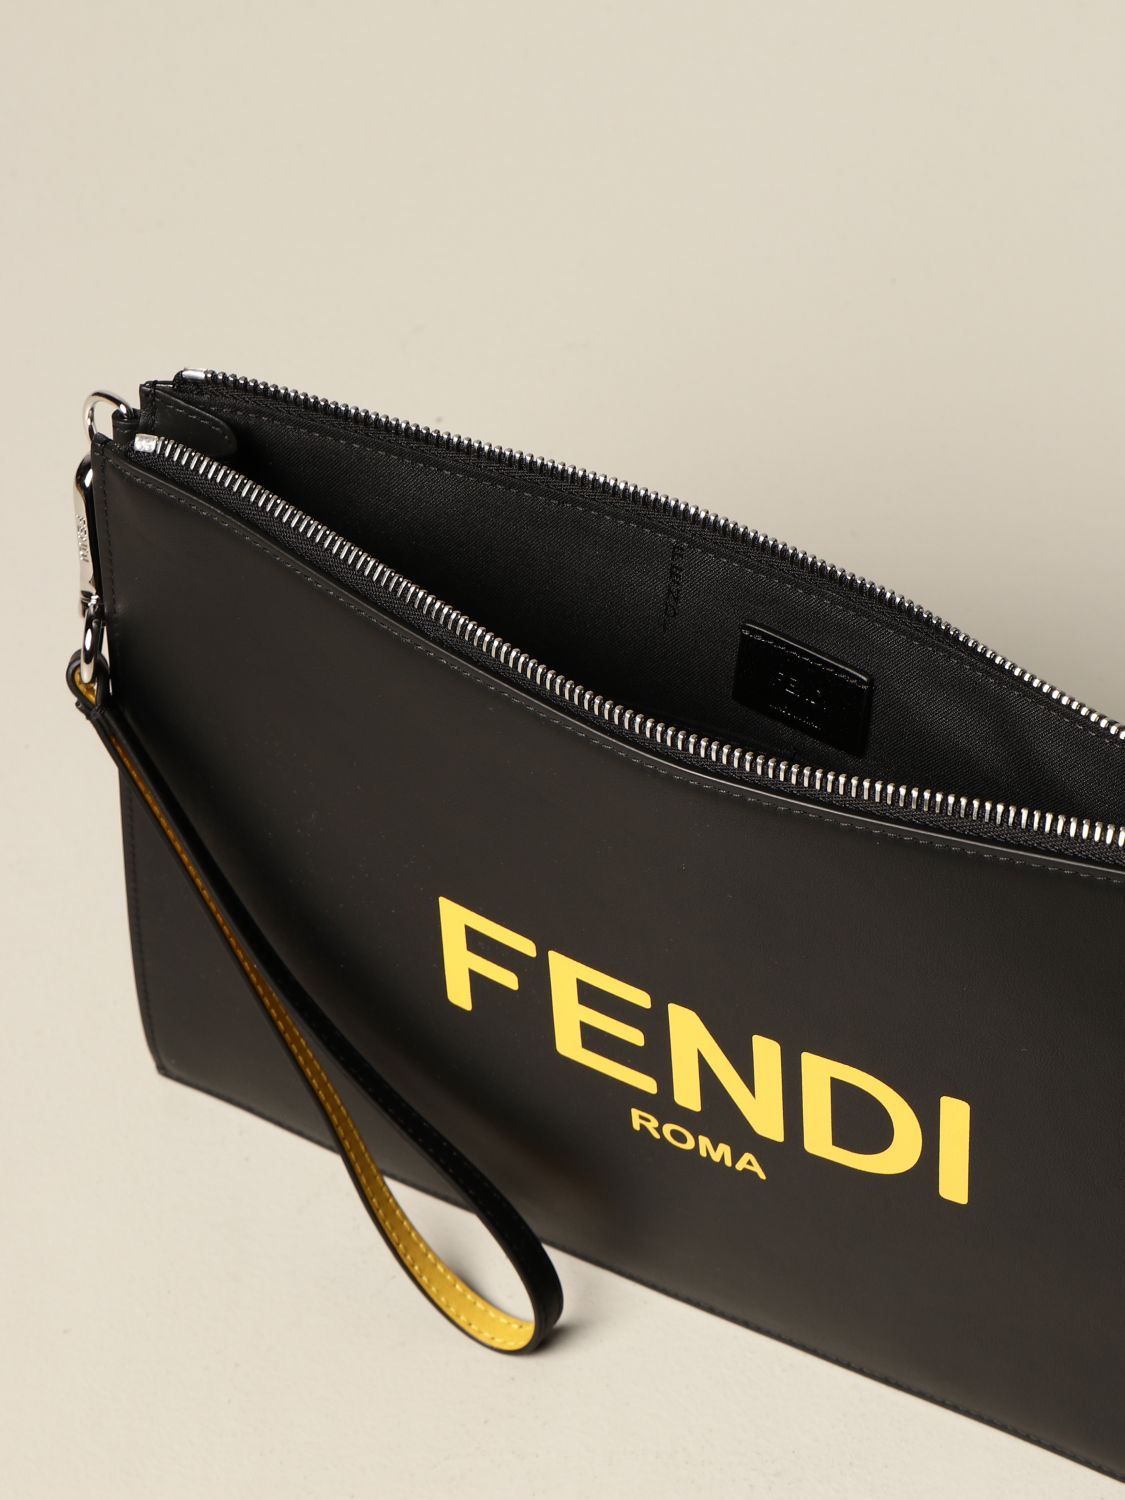 FENDI: leather clutch bag with logo | Bags Fendi Men Black | Bags Fendi